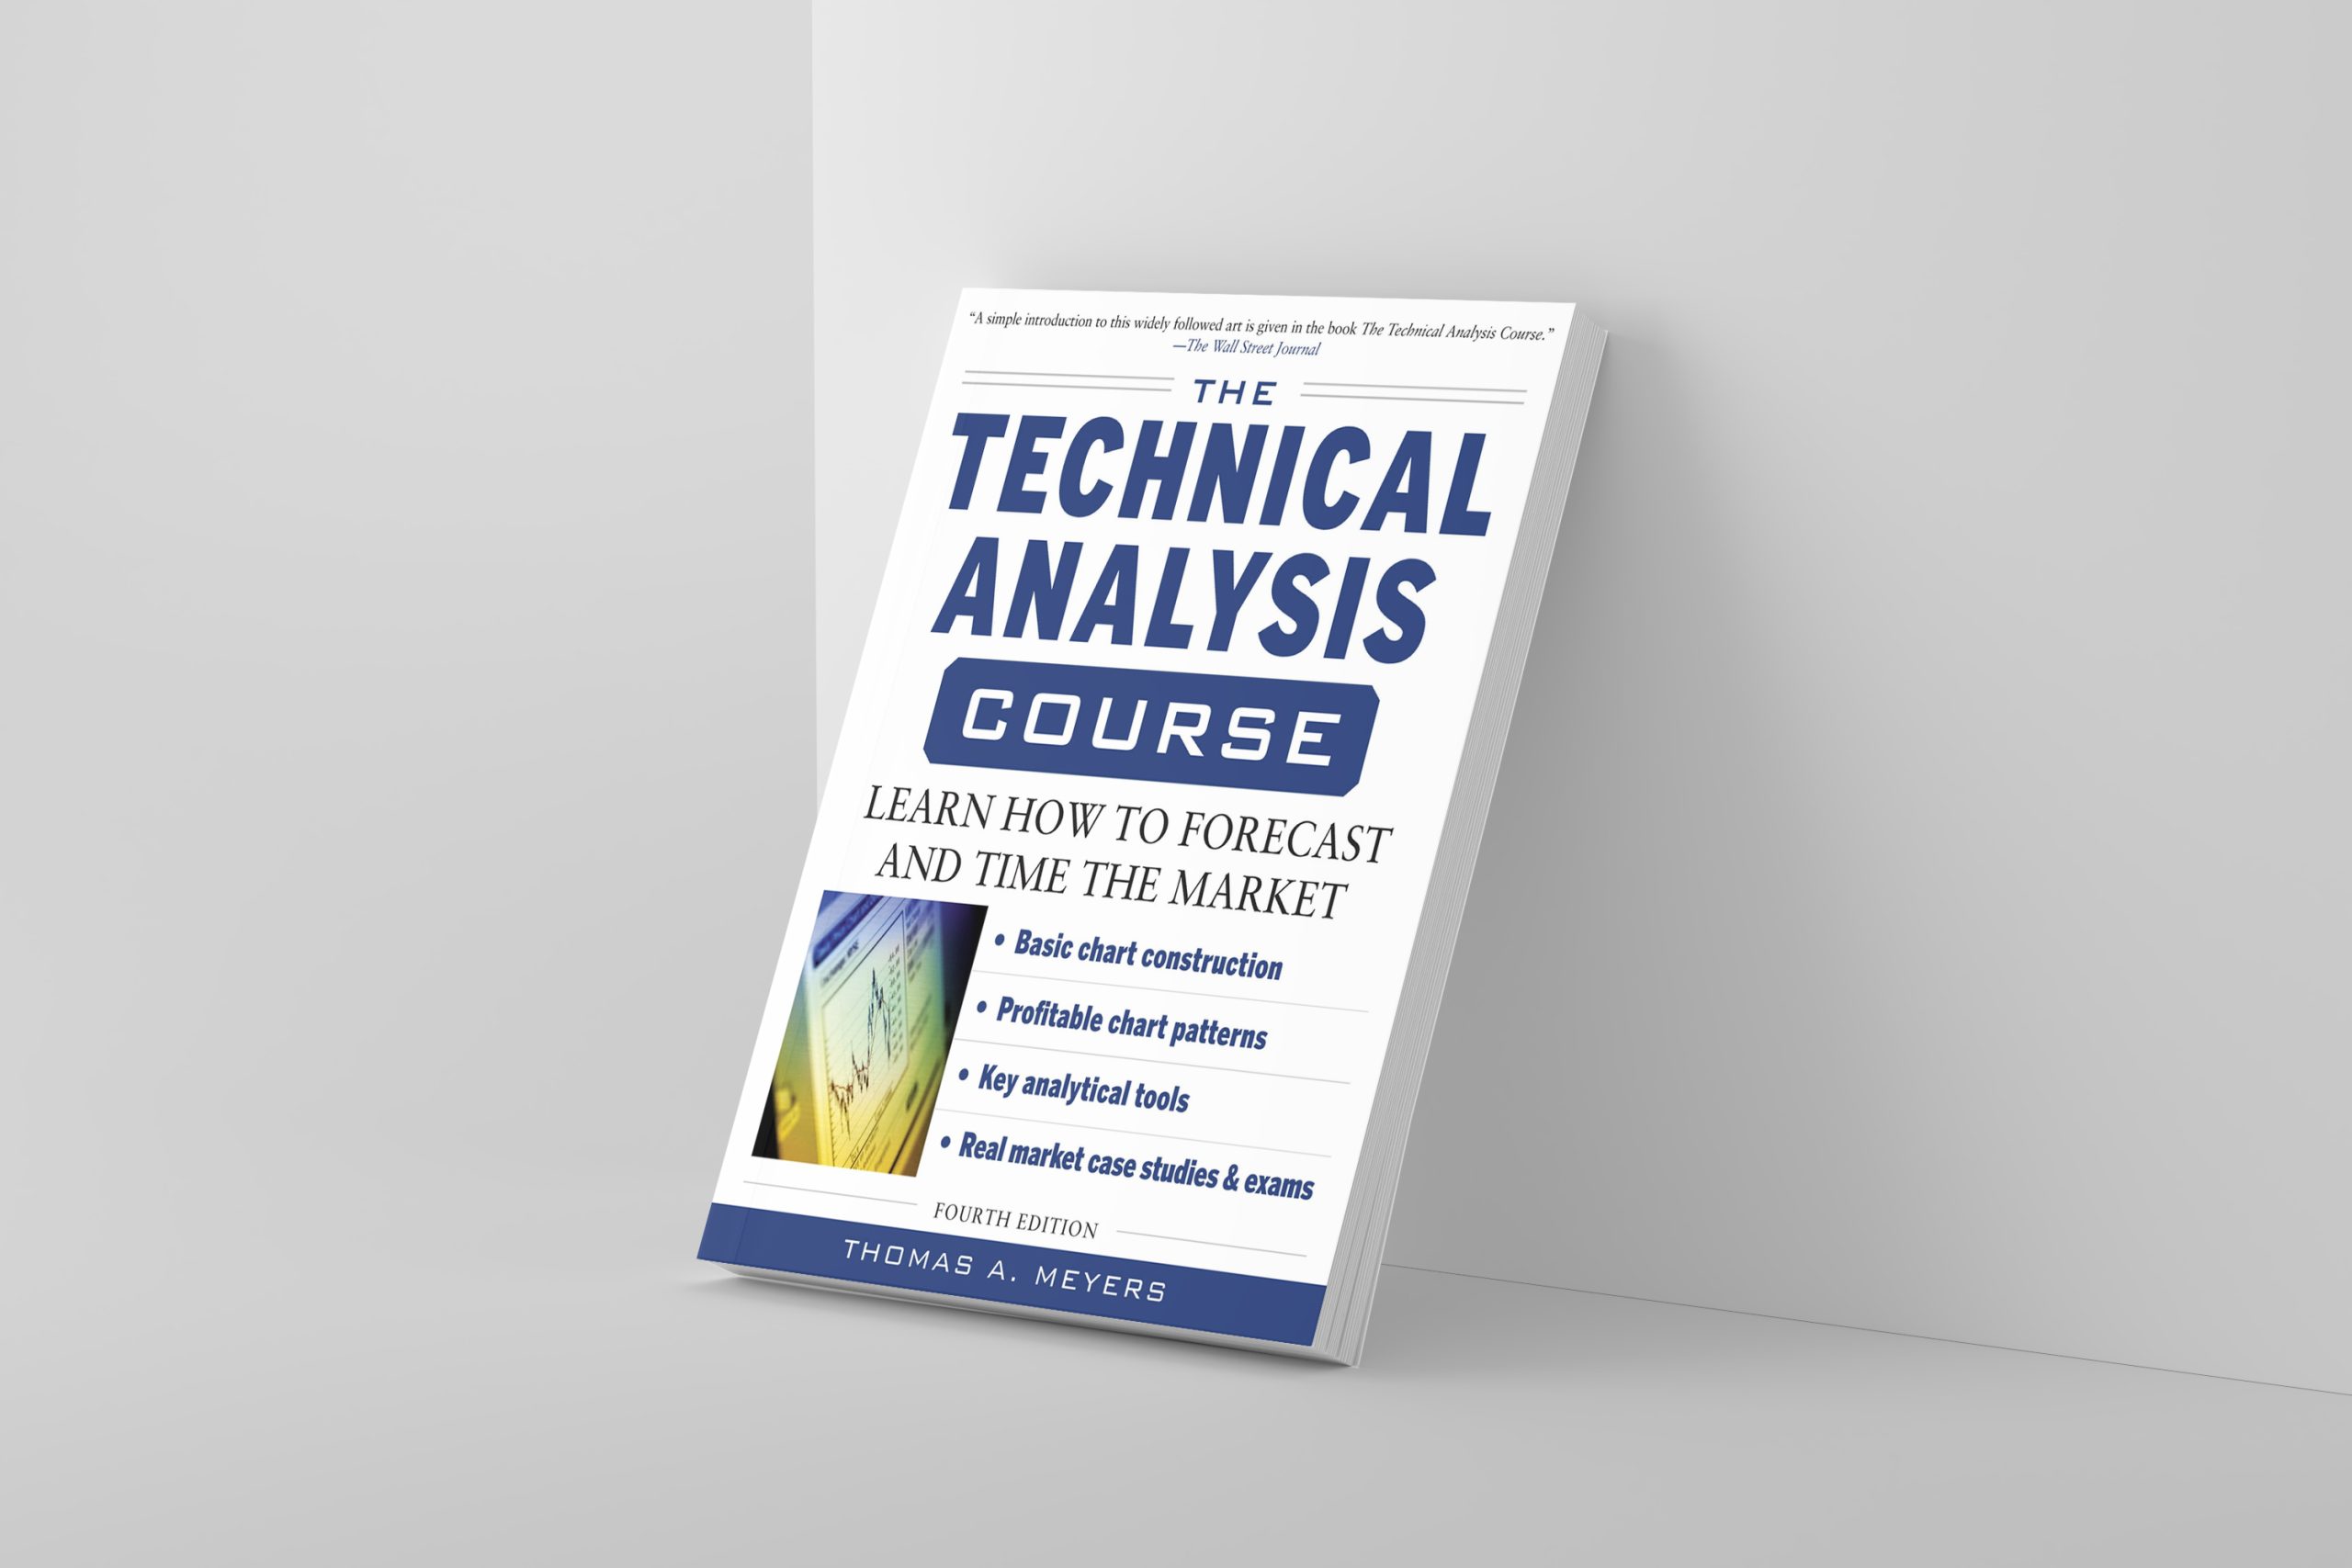 تحليل تكنيكي مقدماتی (بخش اول)